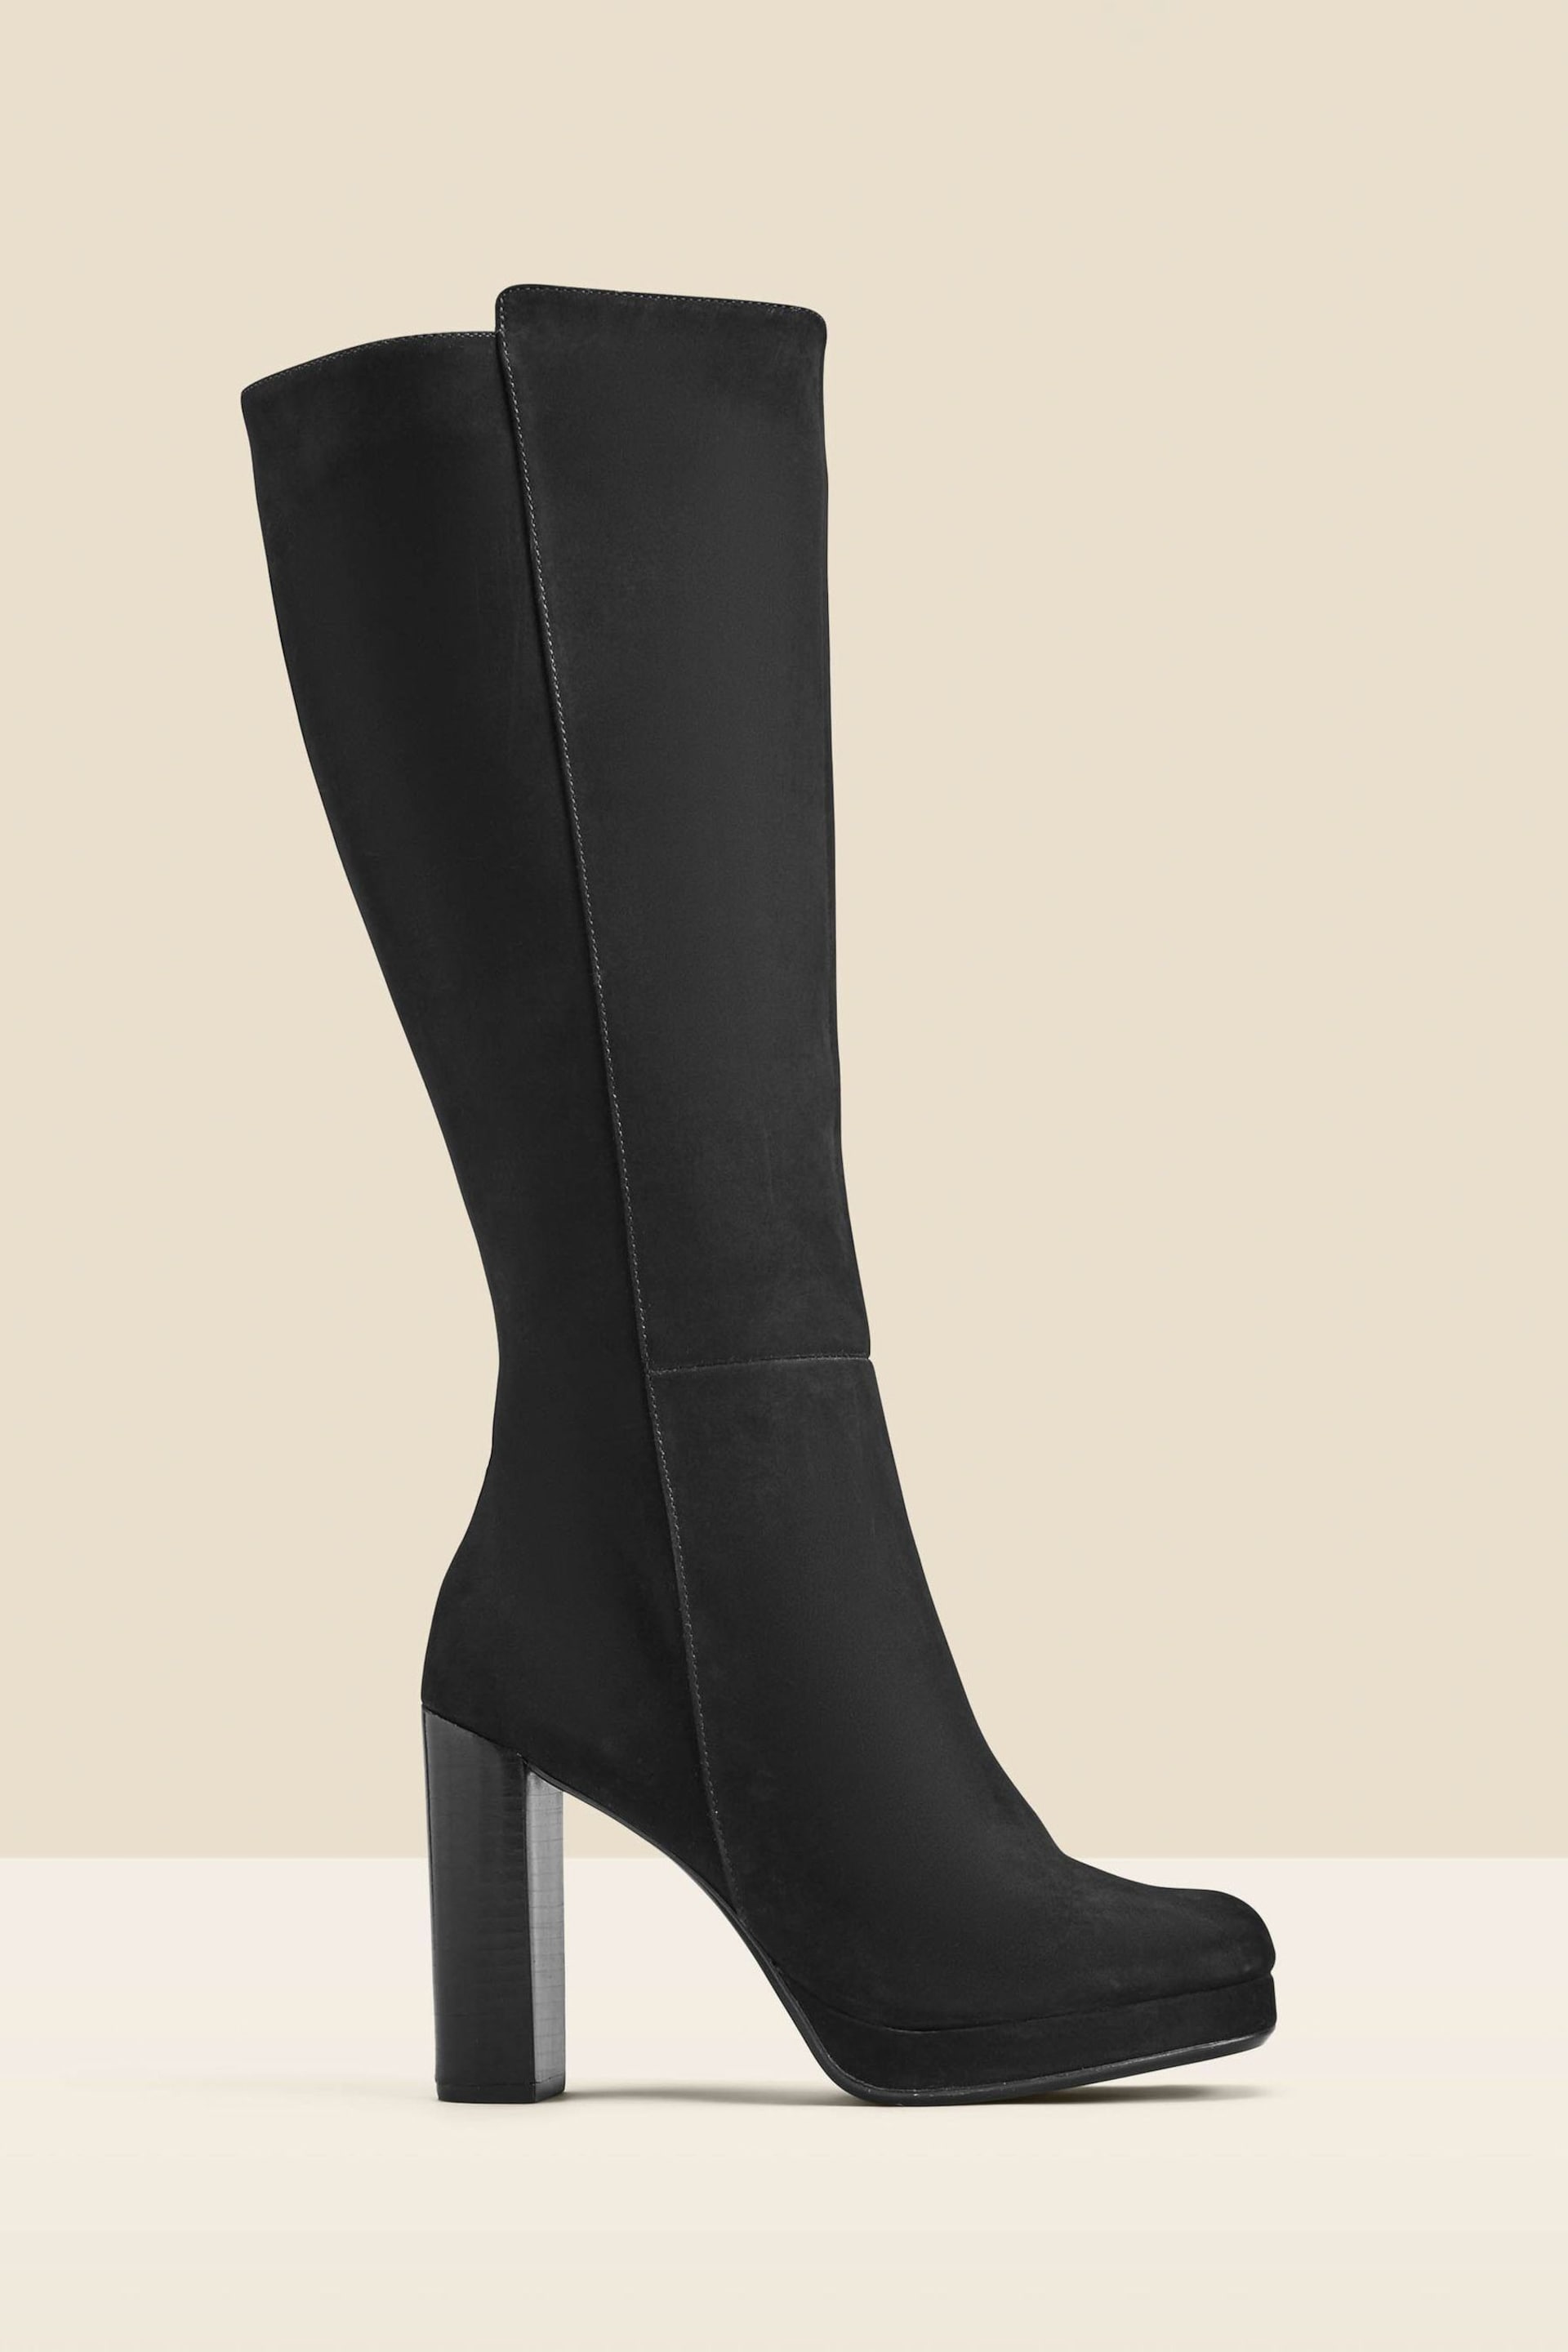 Sosandar Black Nubuck Leather Platform Block Heel Knee High Boots - Image 1 of 4